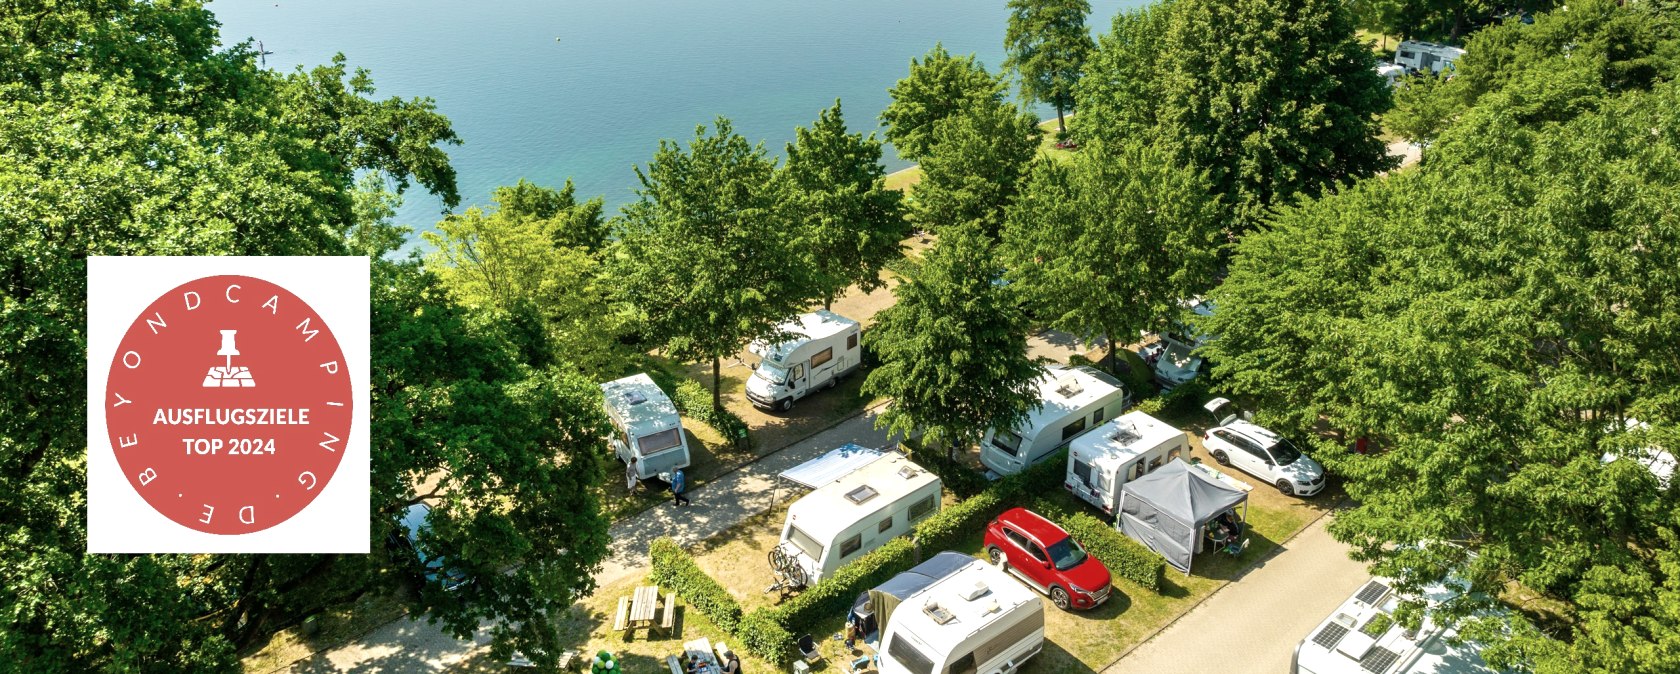 Wohnmobilstellplätze - RCN Camping, © Eifel Tourismus GmbH, Dominik Ketz